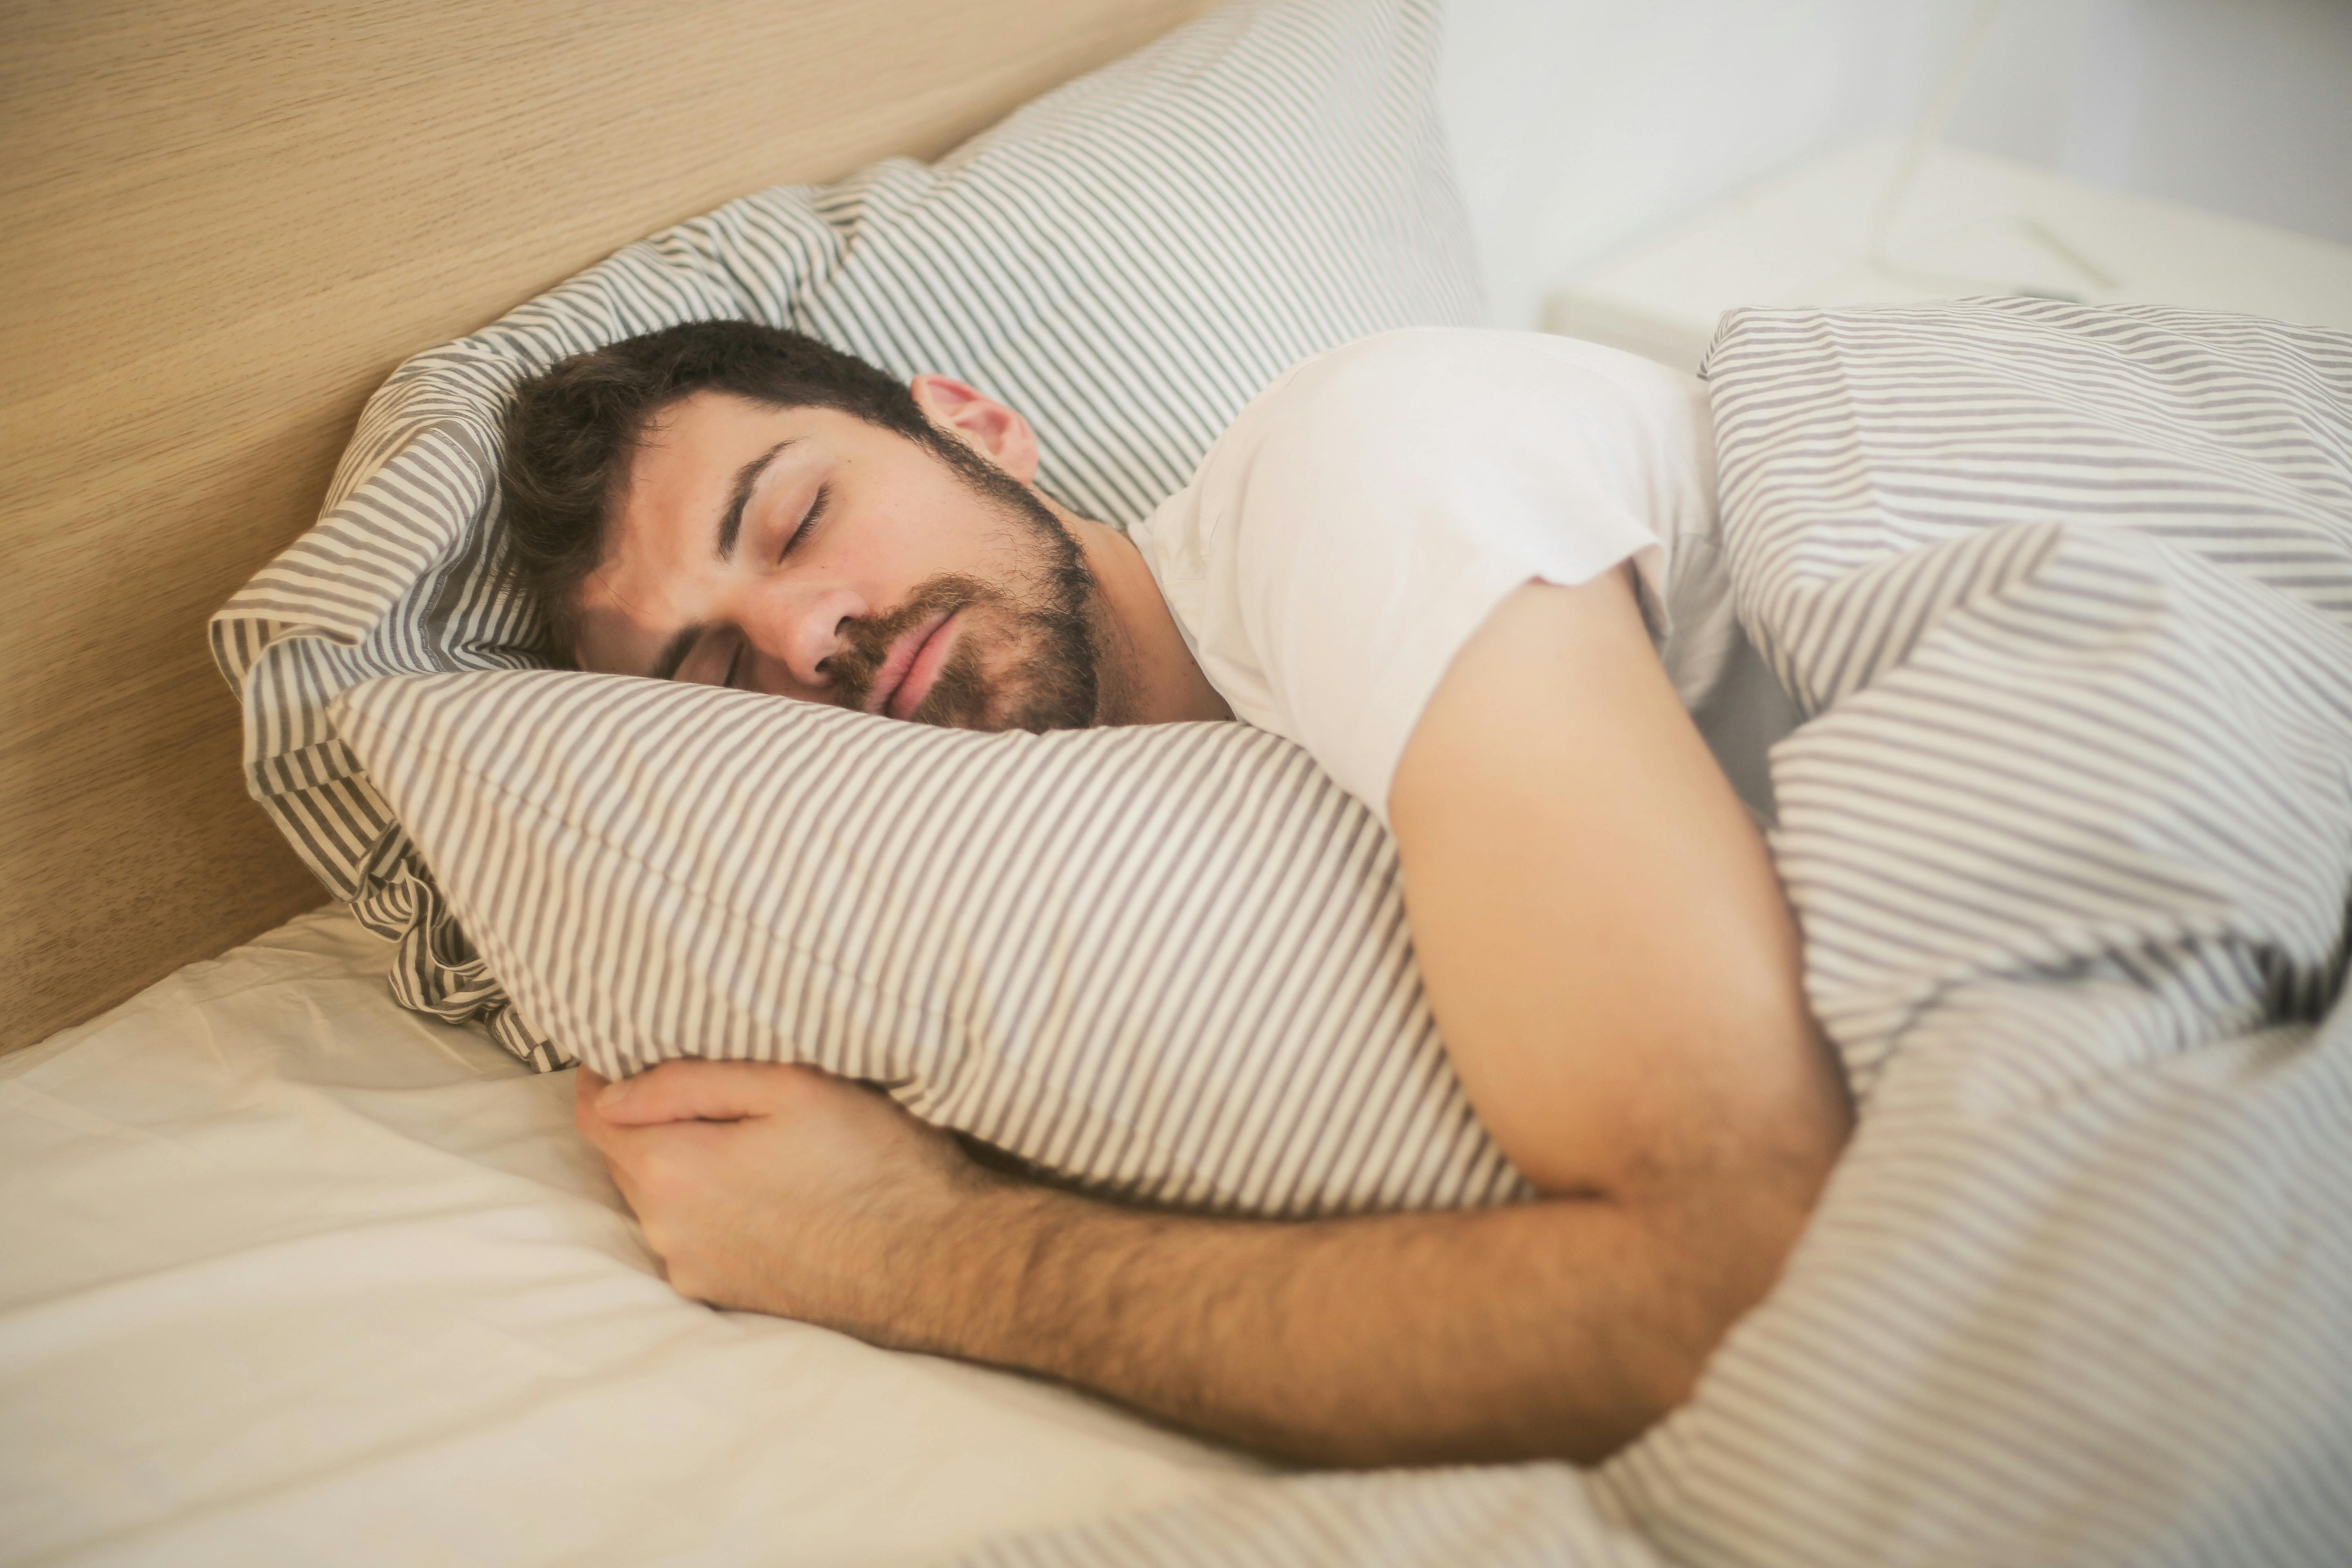 A man sleeping comfortably | Source: Pexels